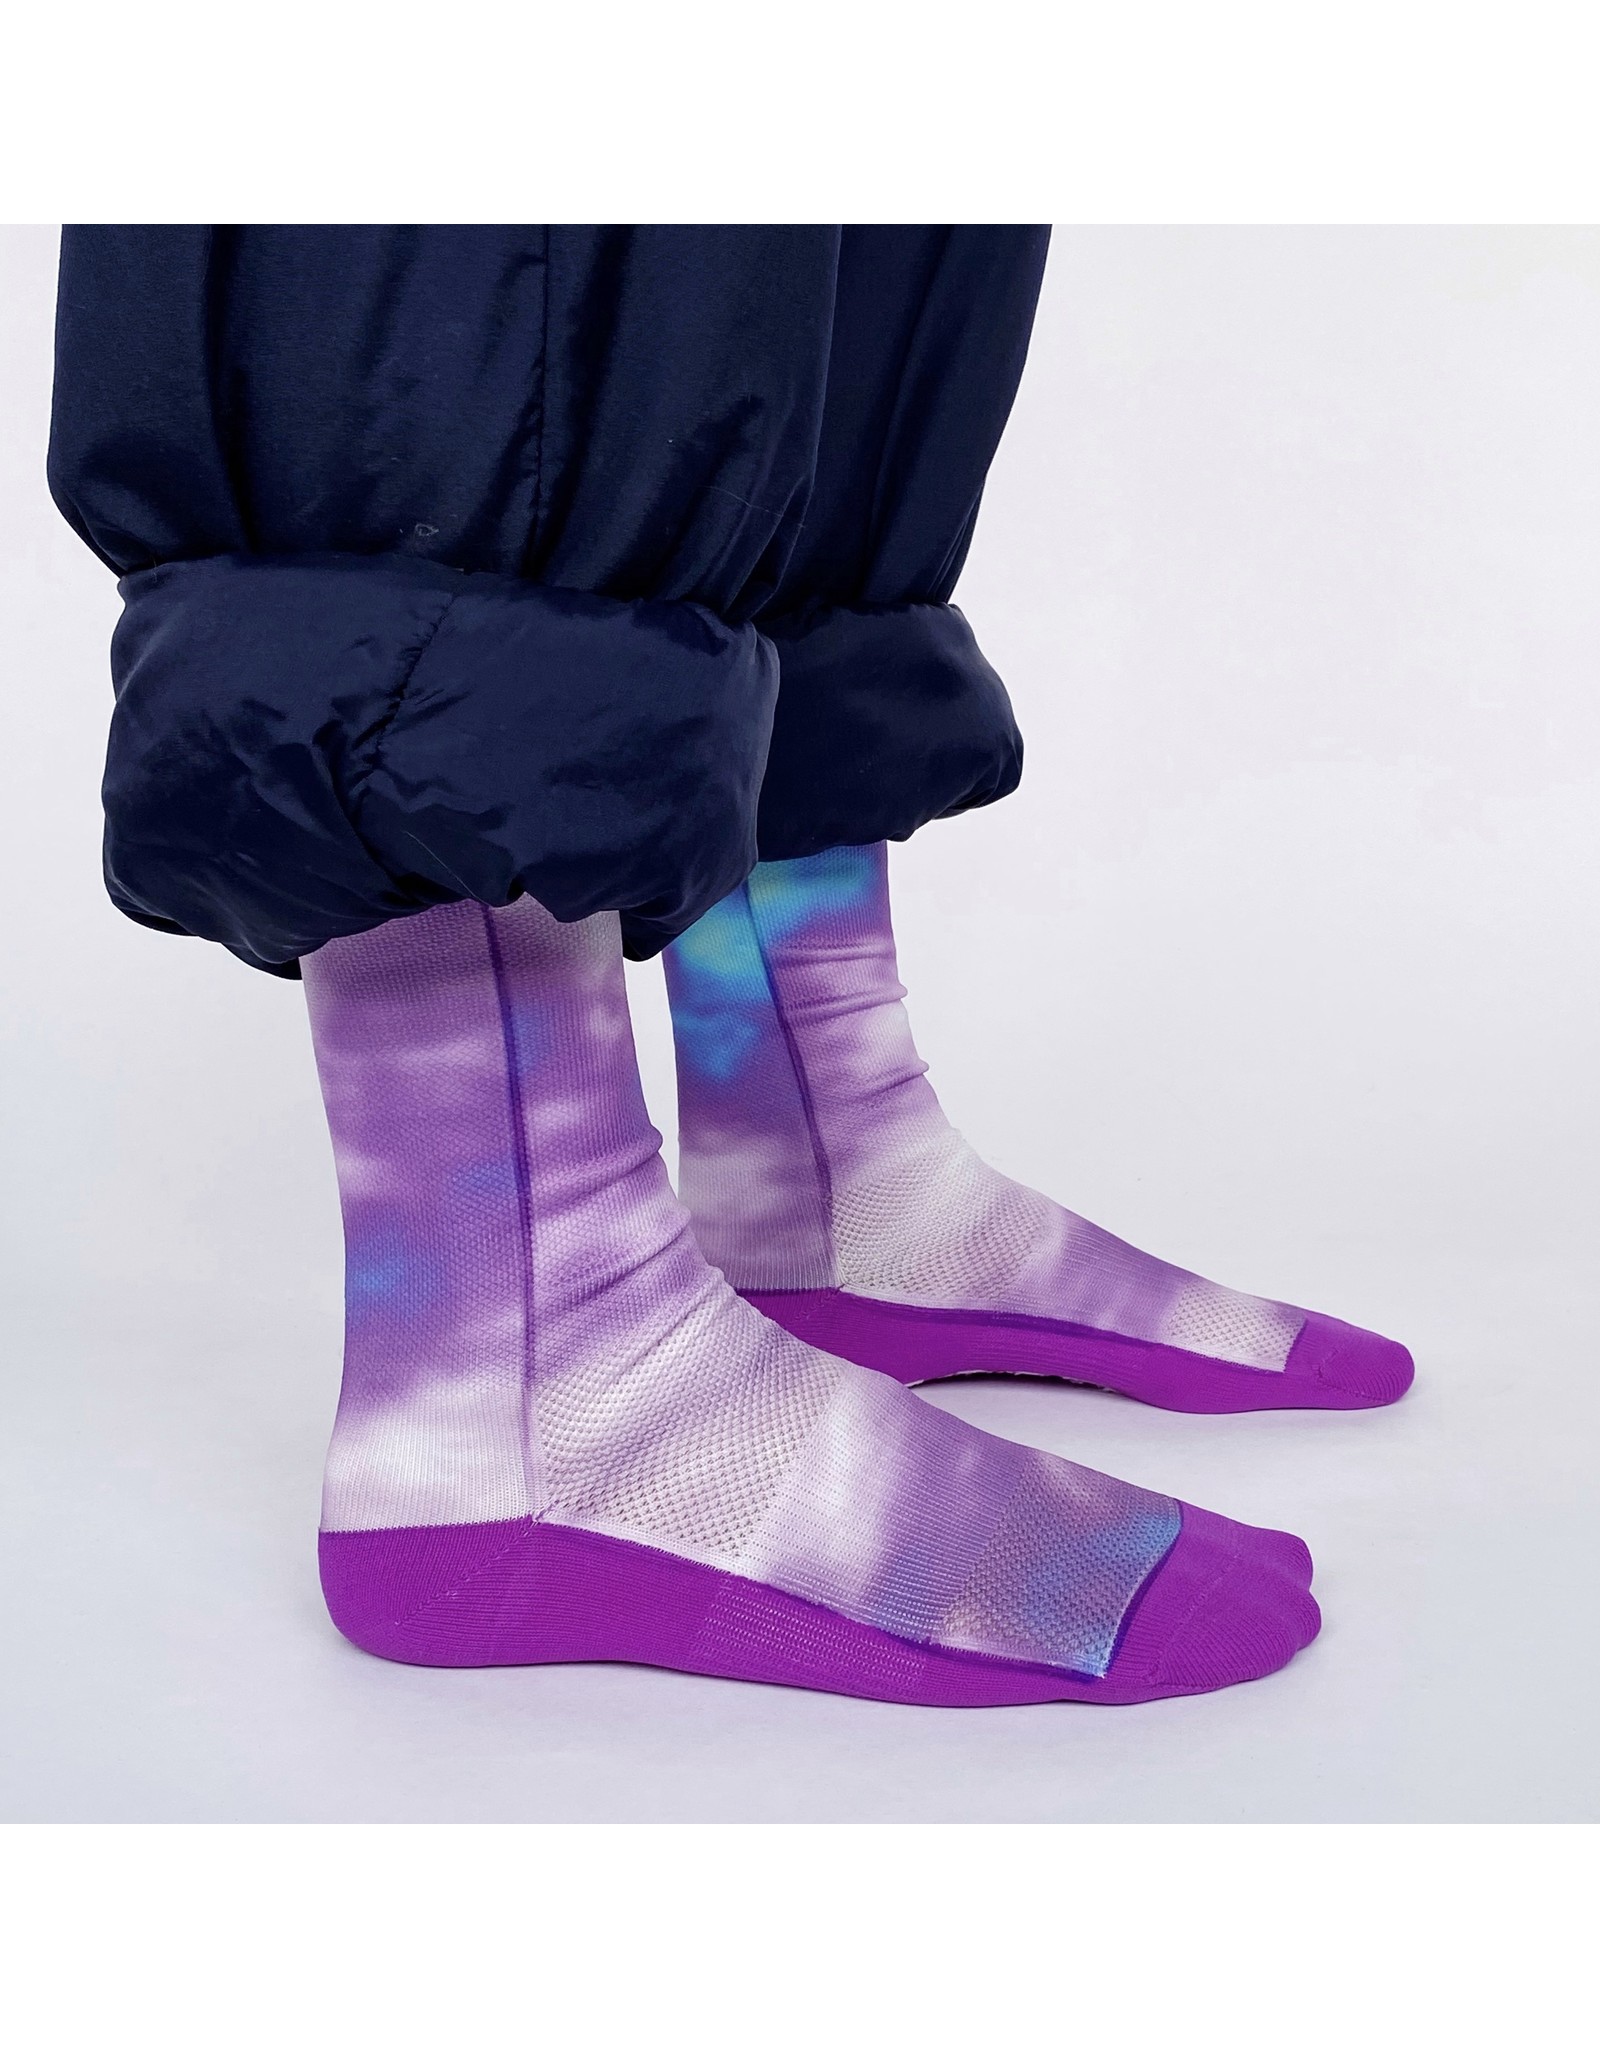 Igloofest Tie-Dye Socks |  Collection 2021